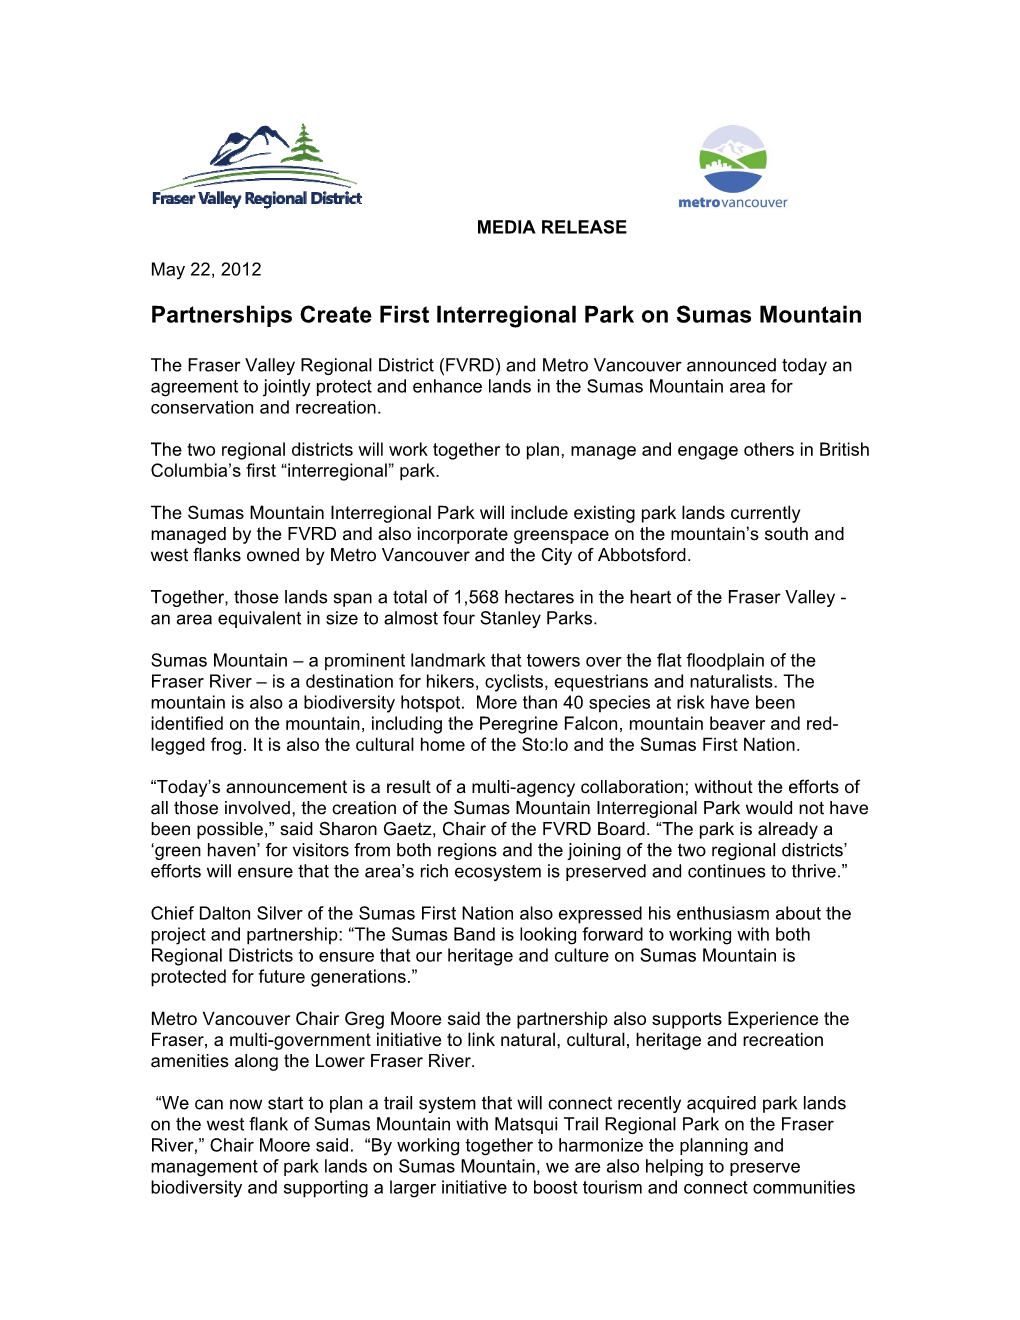 Partnerships Create First Interregional Park on Sumas Mountain